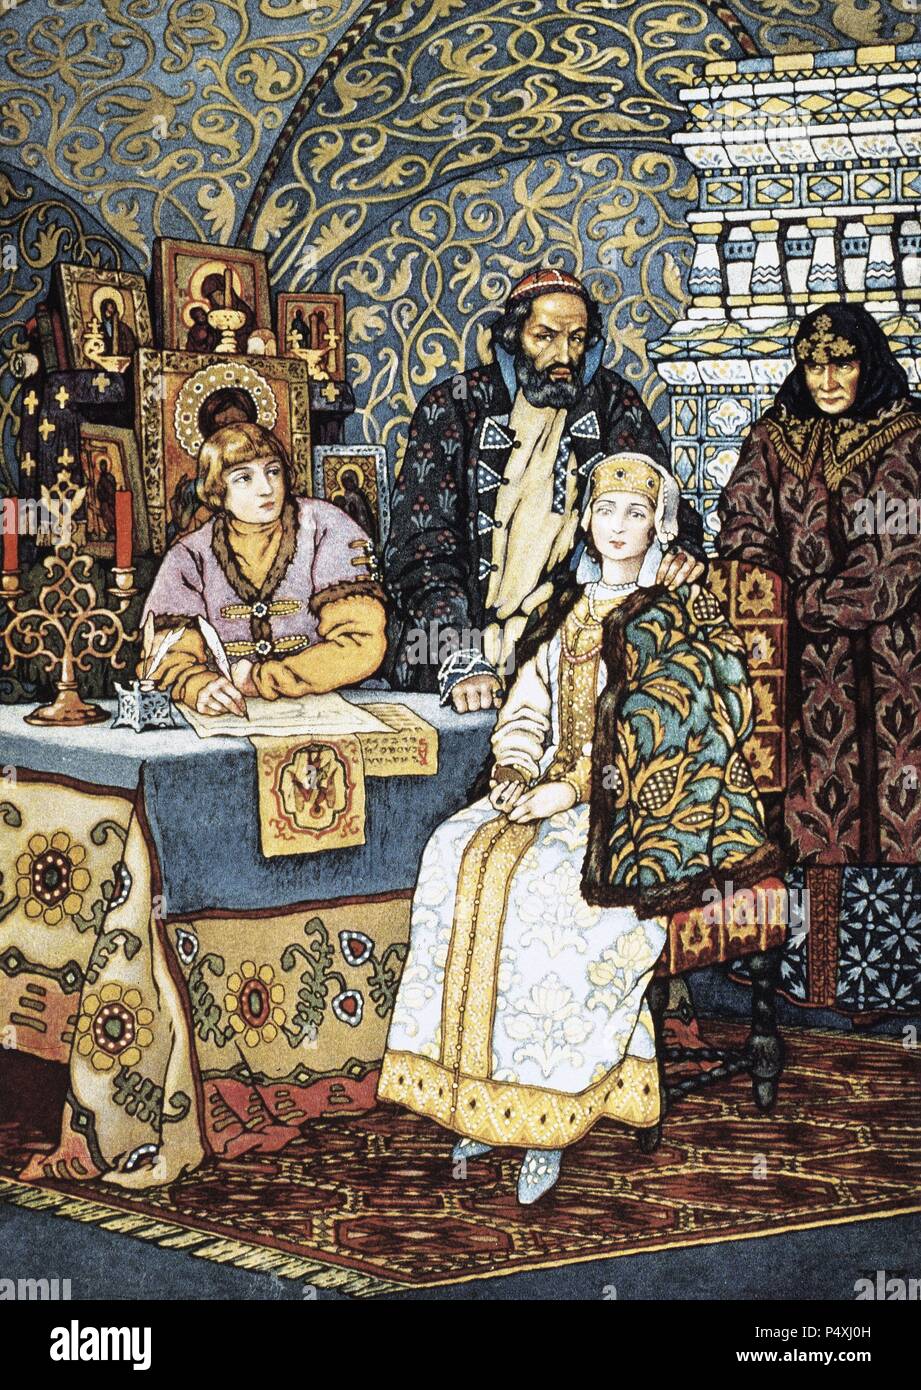 Alexander Pushkin (1799-1837). Russian author of the Romantic era. Boris Godunov, 1825, drama. Illustration by Boris Zworykine. Pari s, 1927. Stock Photo